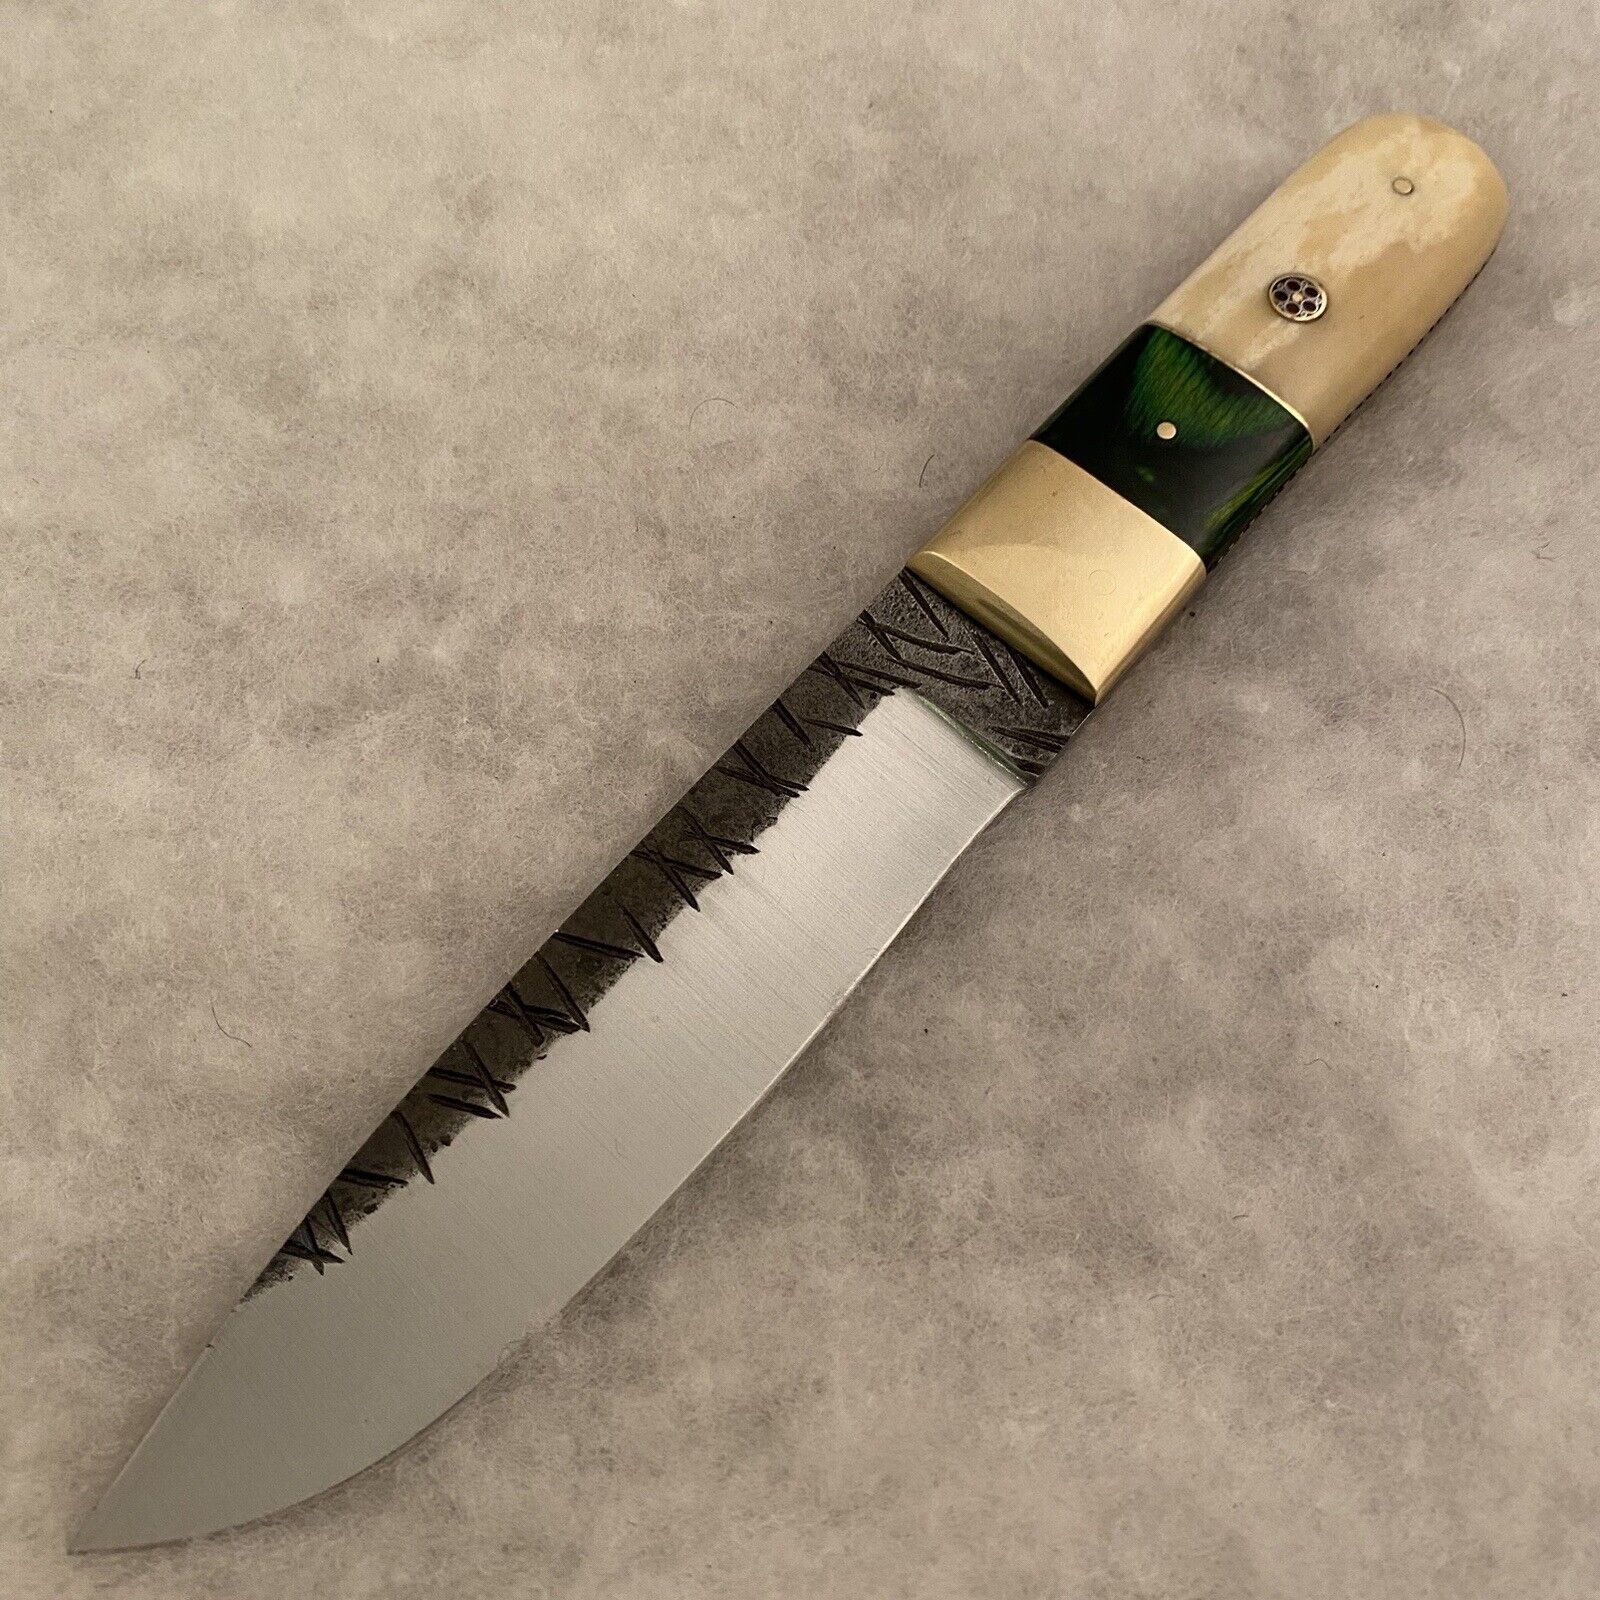 10 1/4” Handmade Leaf Spring Steel HUNTING Skinning CAMPING EDC Knife KY-168